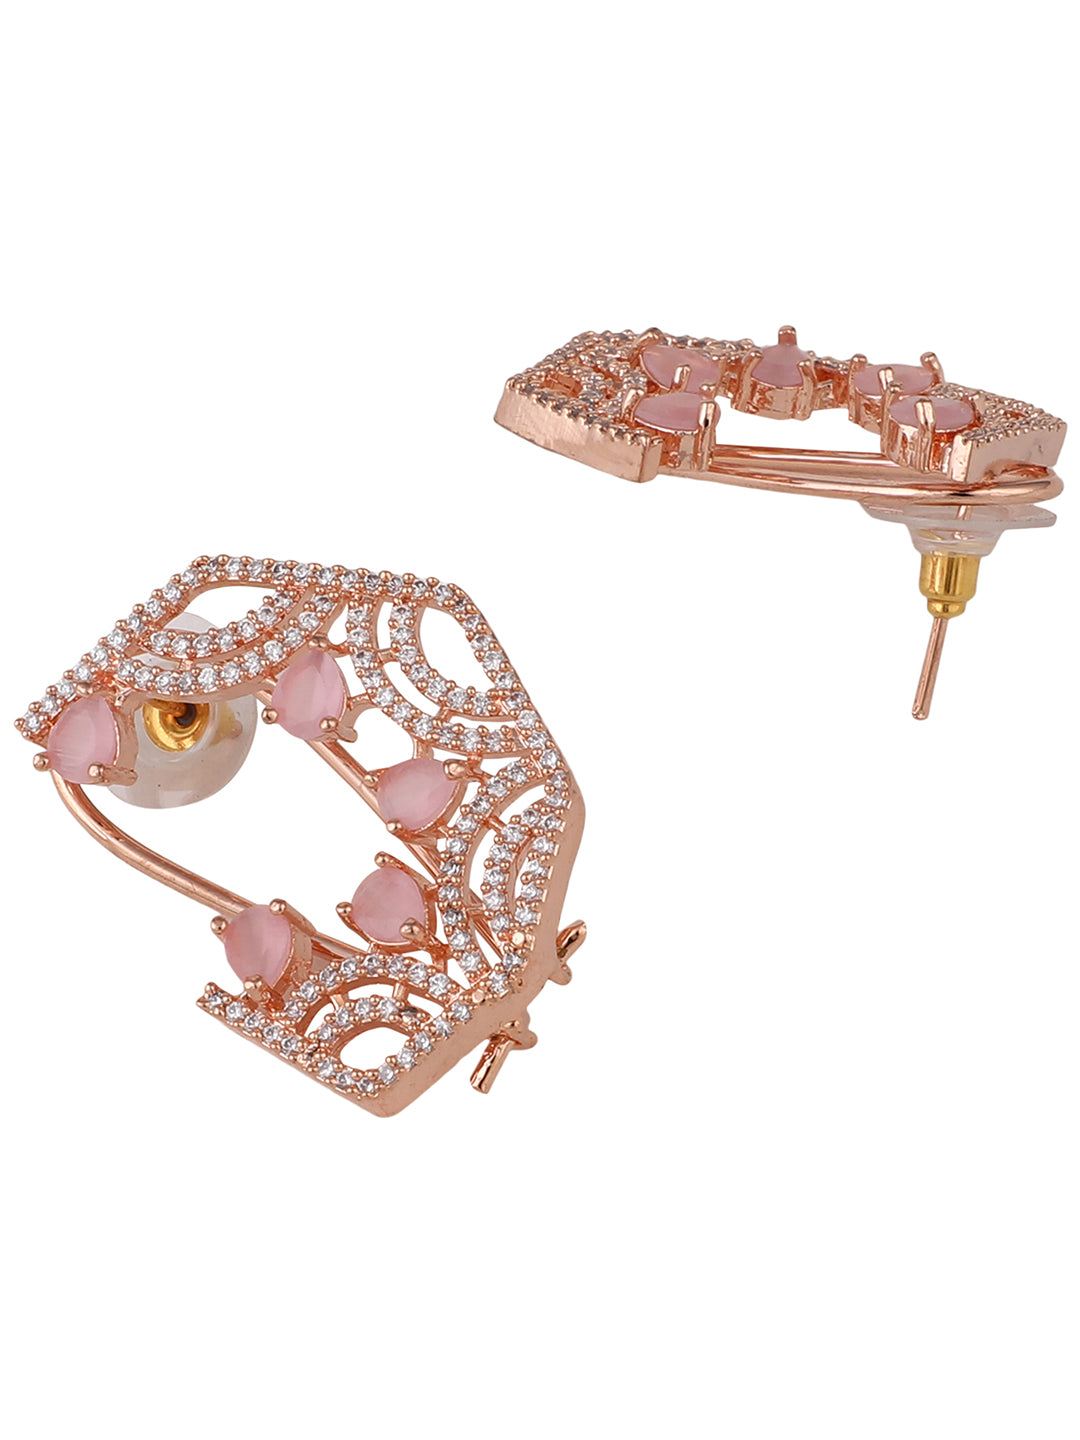 Women's Pink & White American Diamond Floral Shaped Designer Earring - Anikas Creation